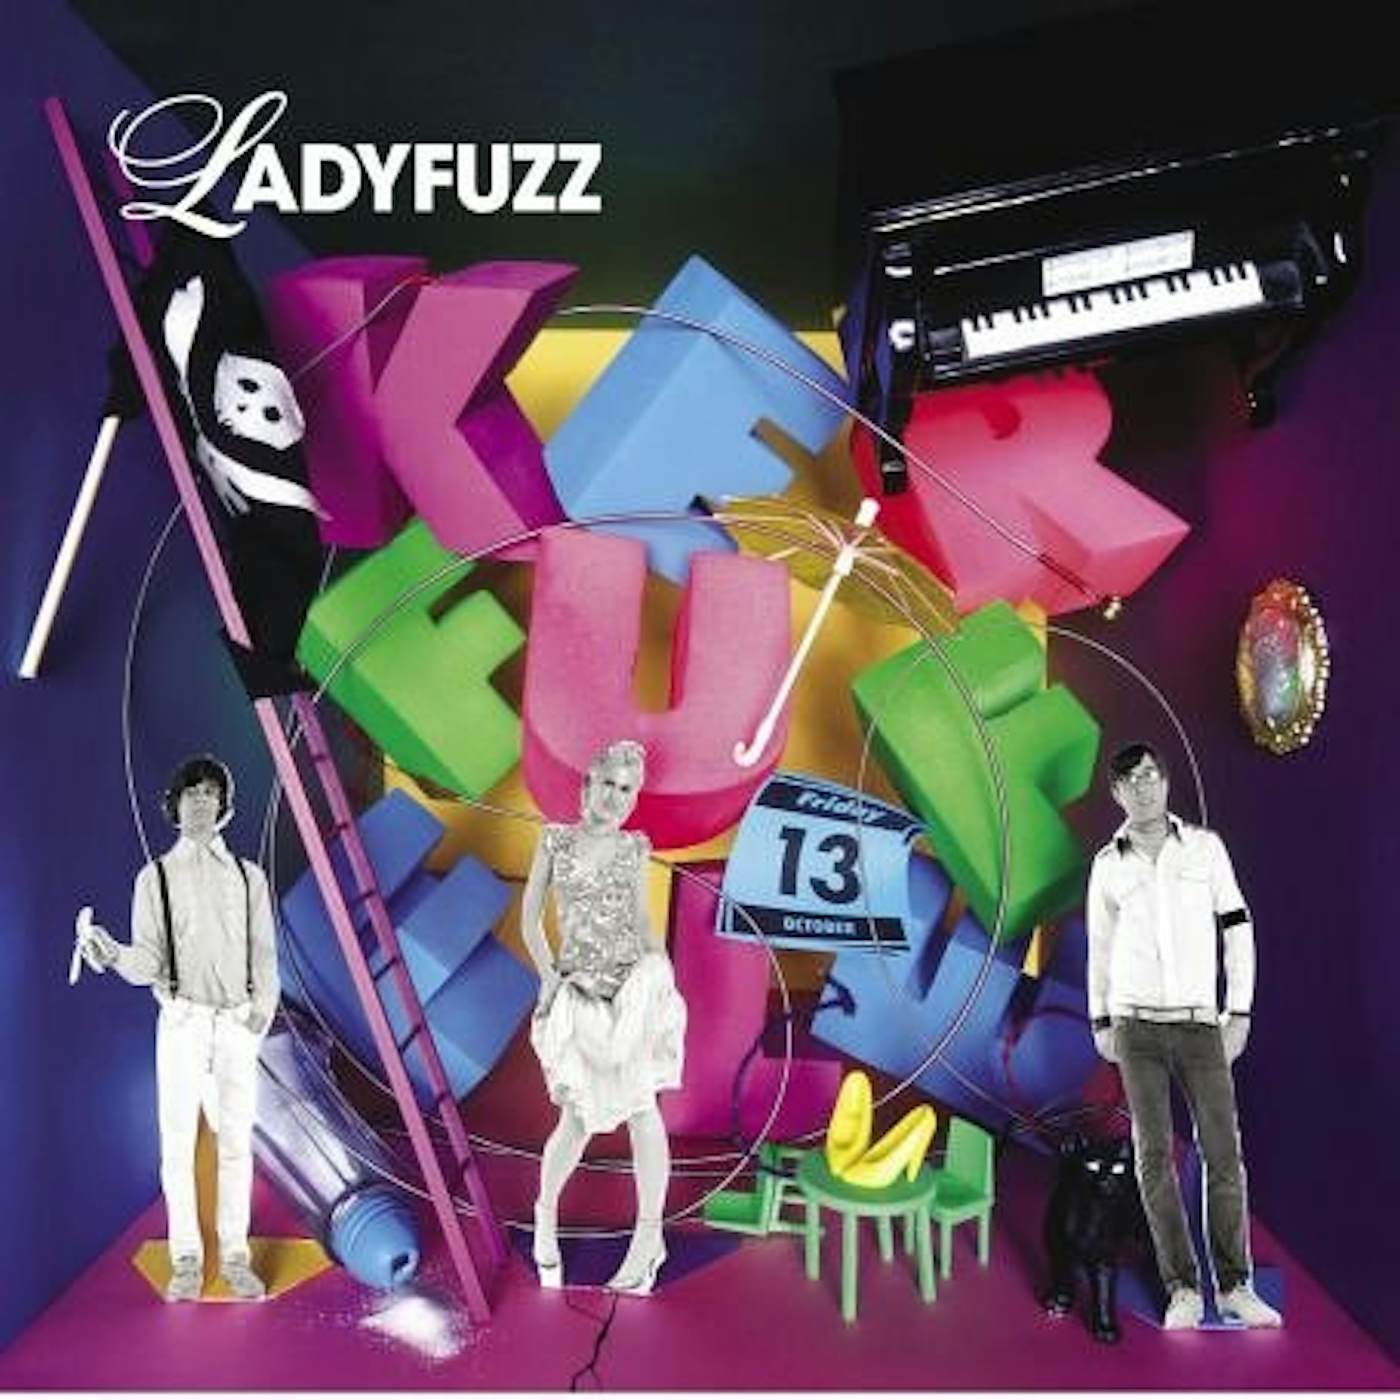 Ladyfuzz KERFUFFLE CD